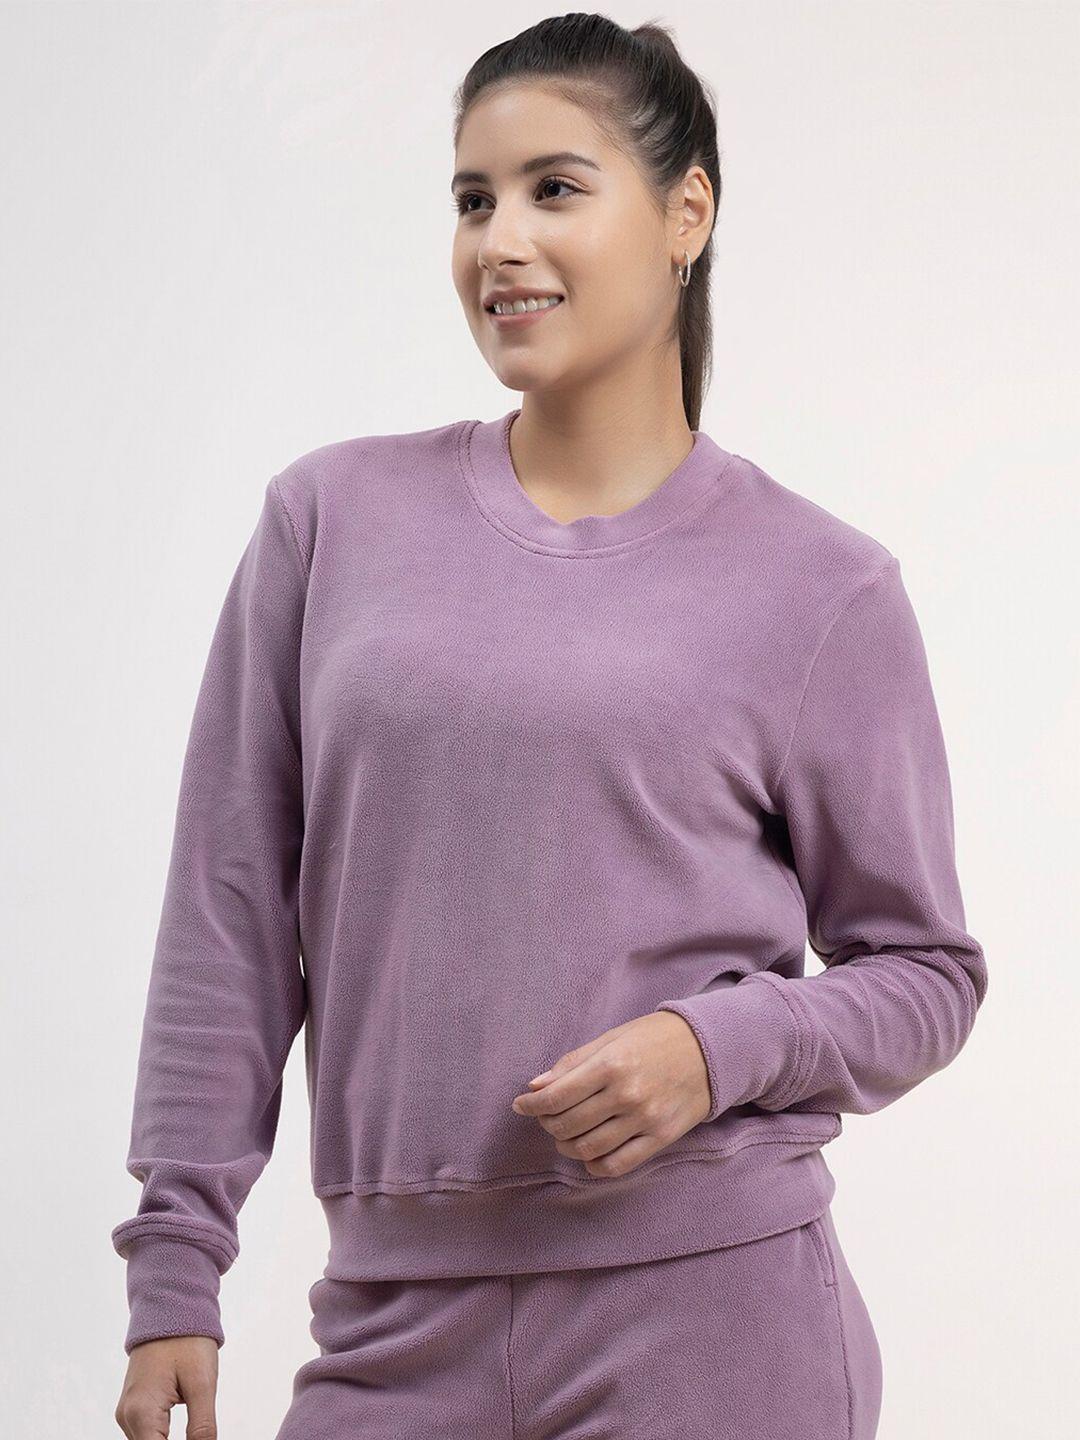 fablestreet women lavender solid fleece round neck sweatshirt